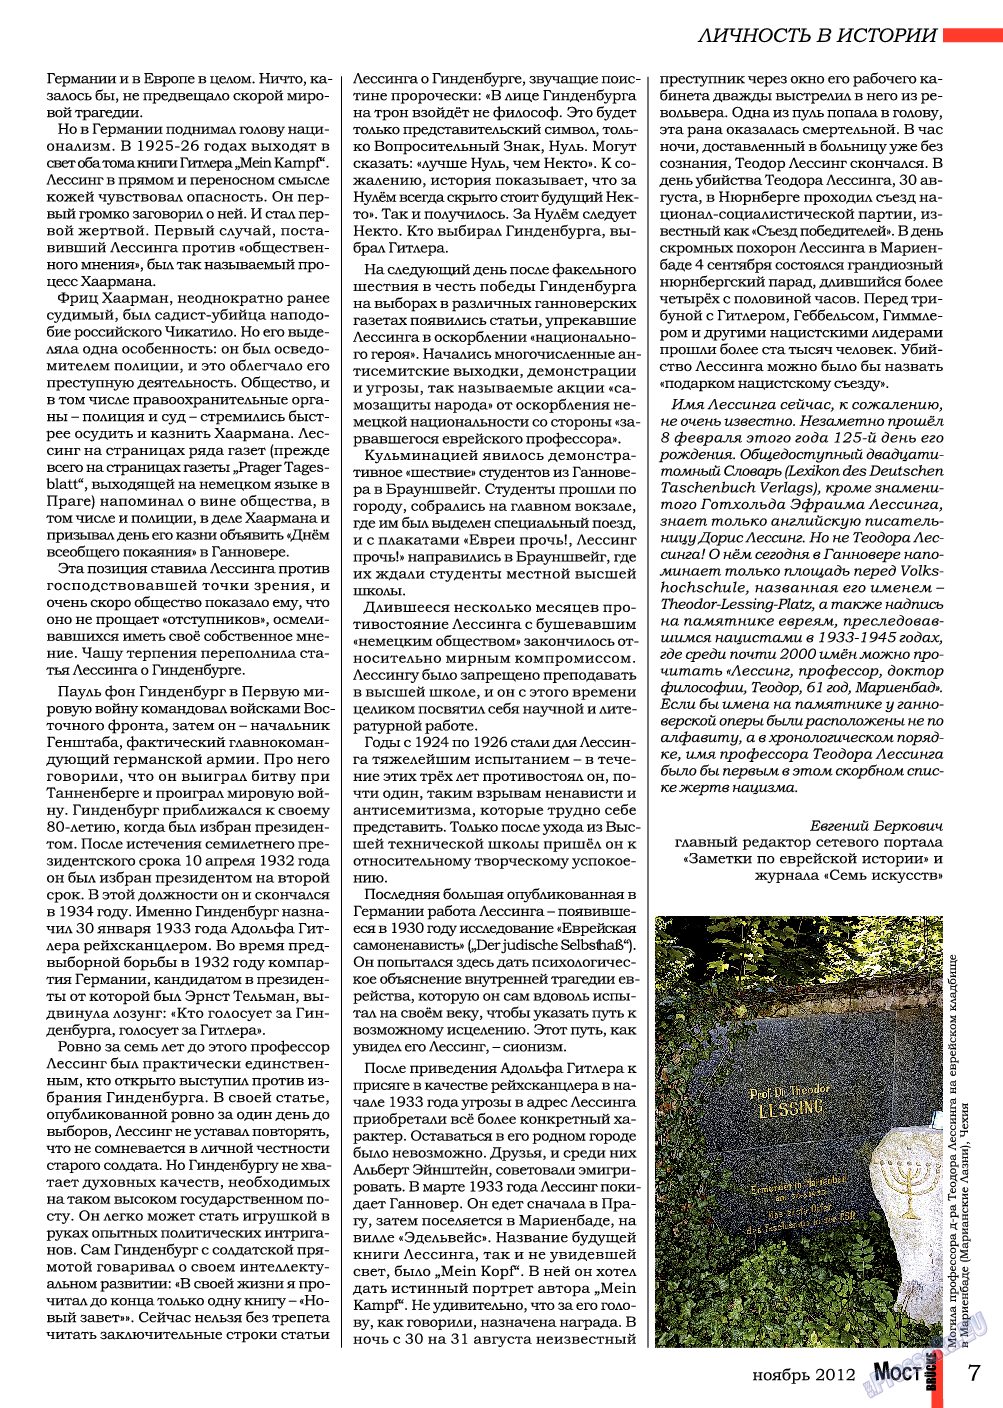 Мост, журнал. 2012 №11 стр.9